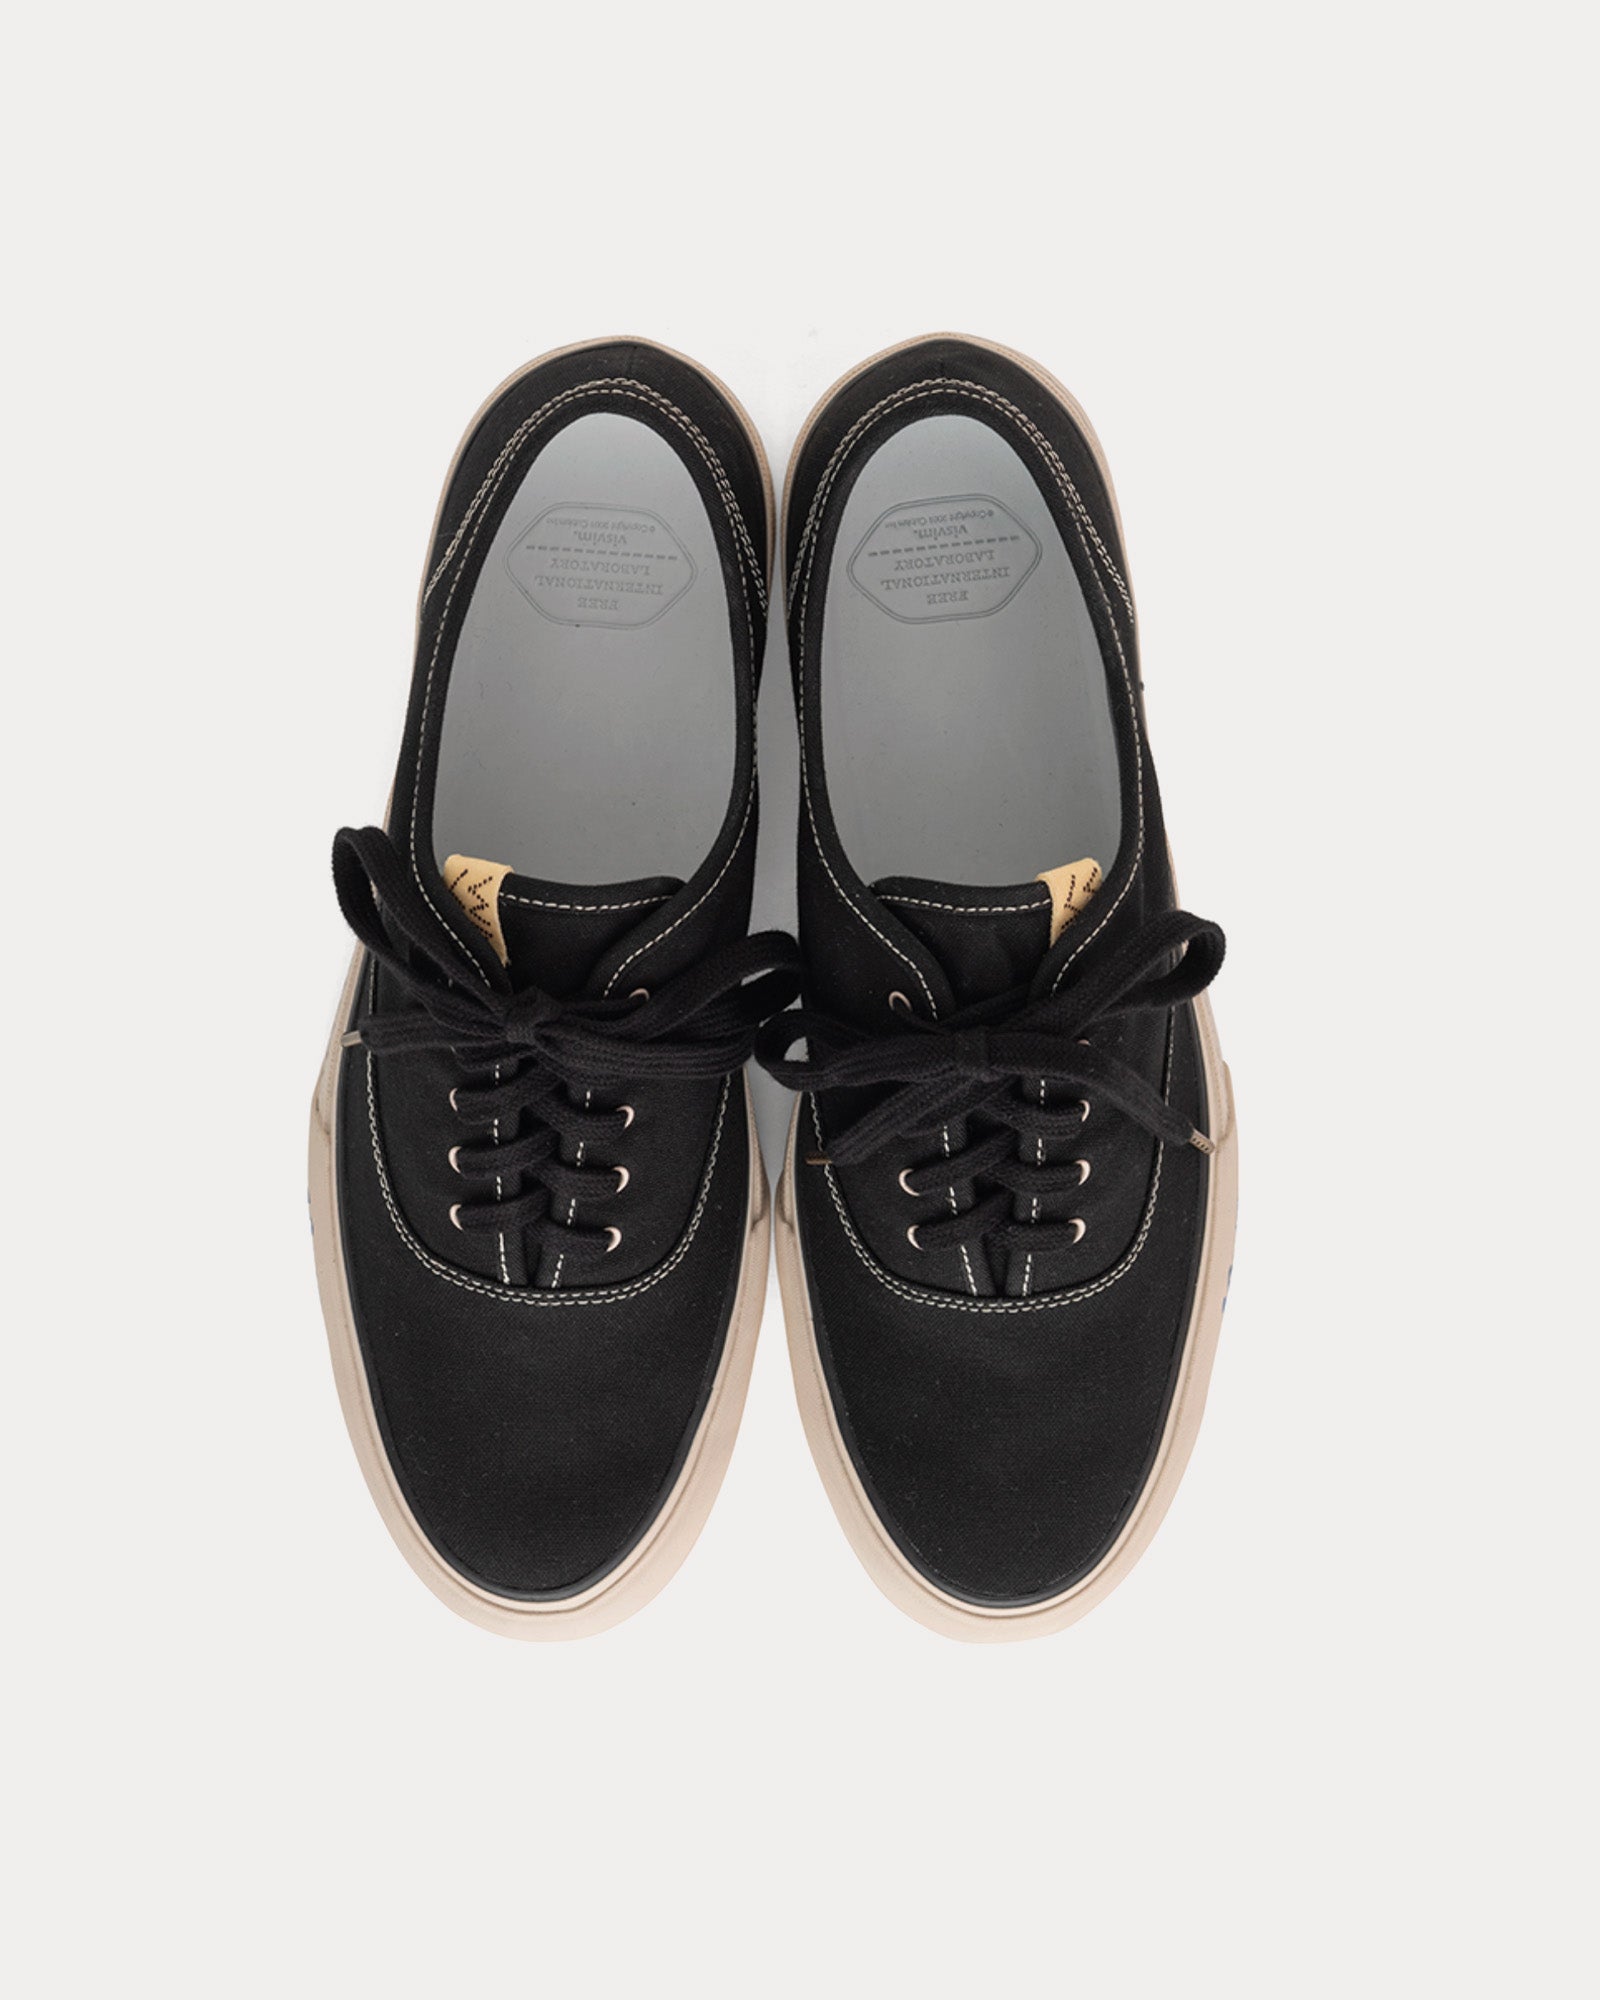 Visvim - Logan Deck Lo Sipe Black Low Top Sneakers